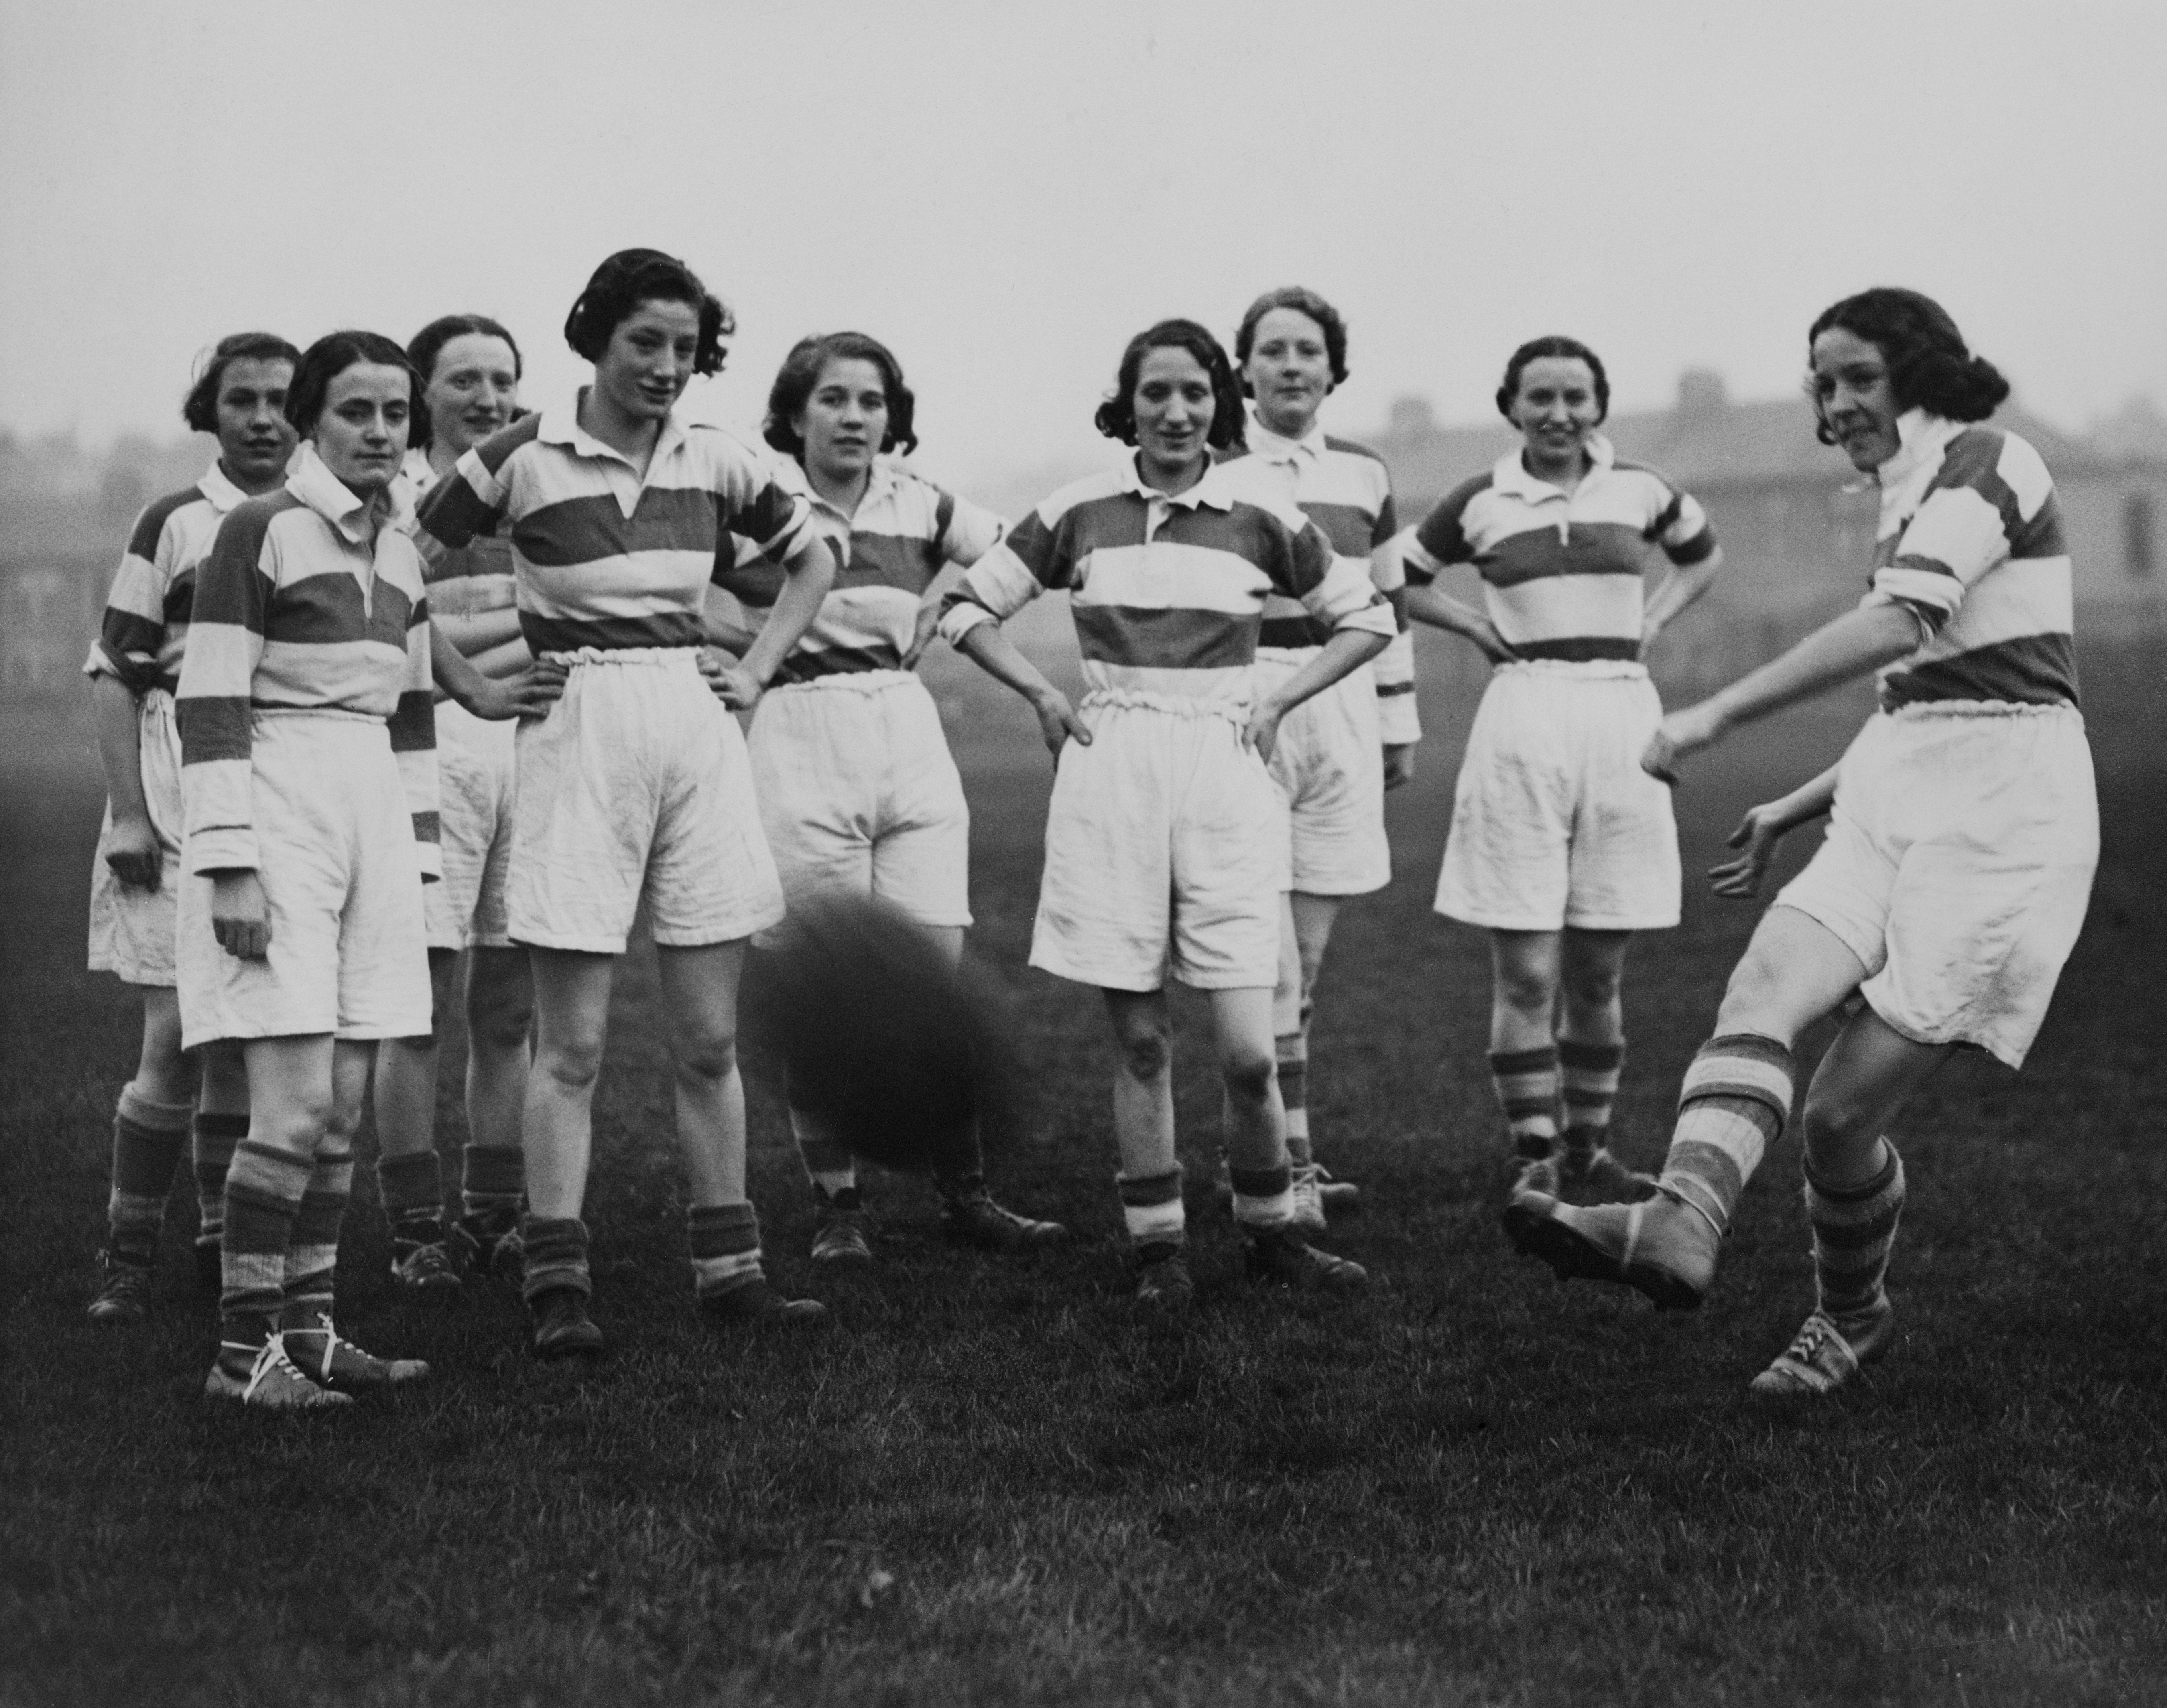 Players of Edinburgh City Girls' football club during a training session in Edinburgh, Scotland, November 27 1937. (Photo by Martin/Fox Photos/Hulton Archive/Getty Images)